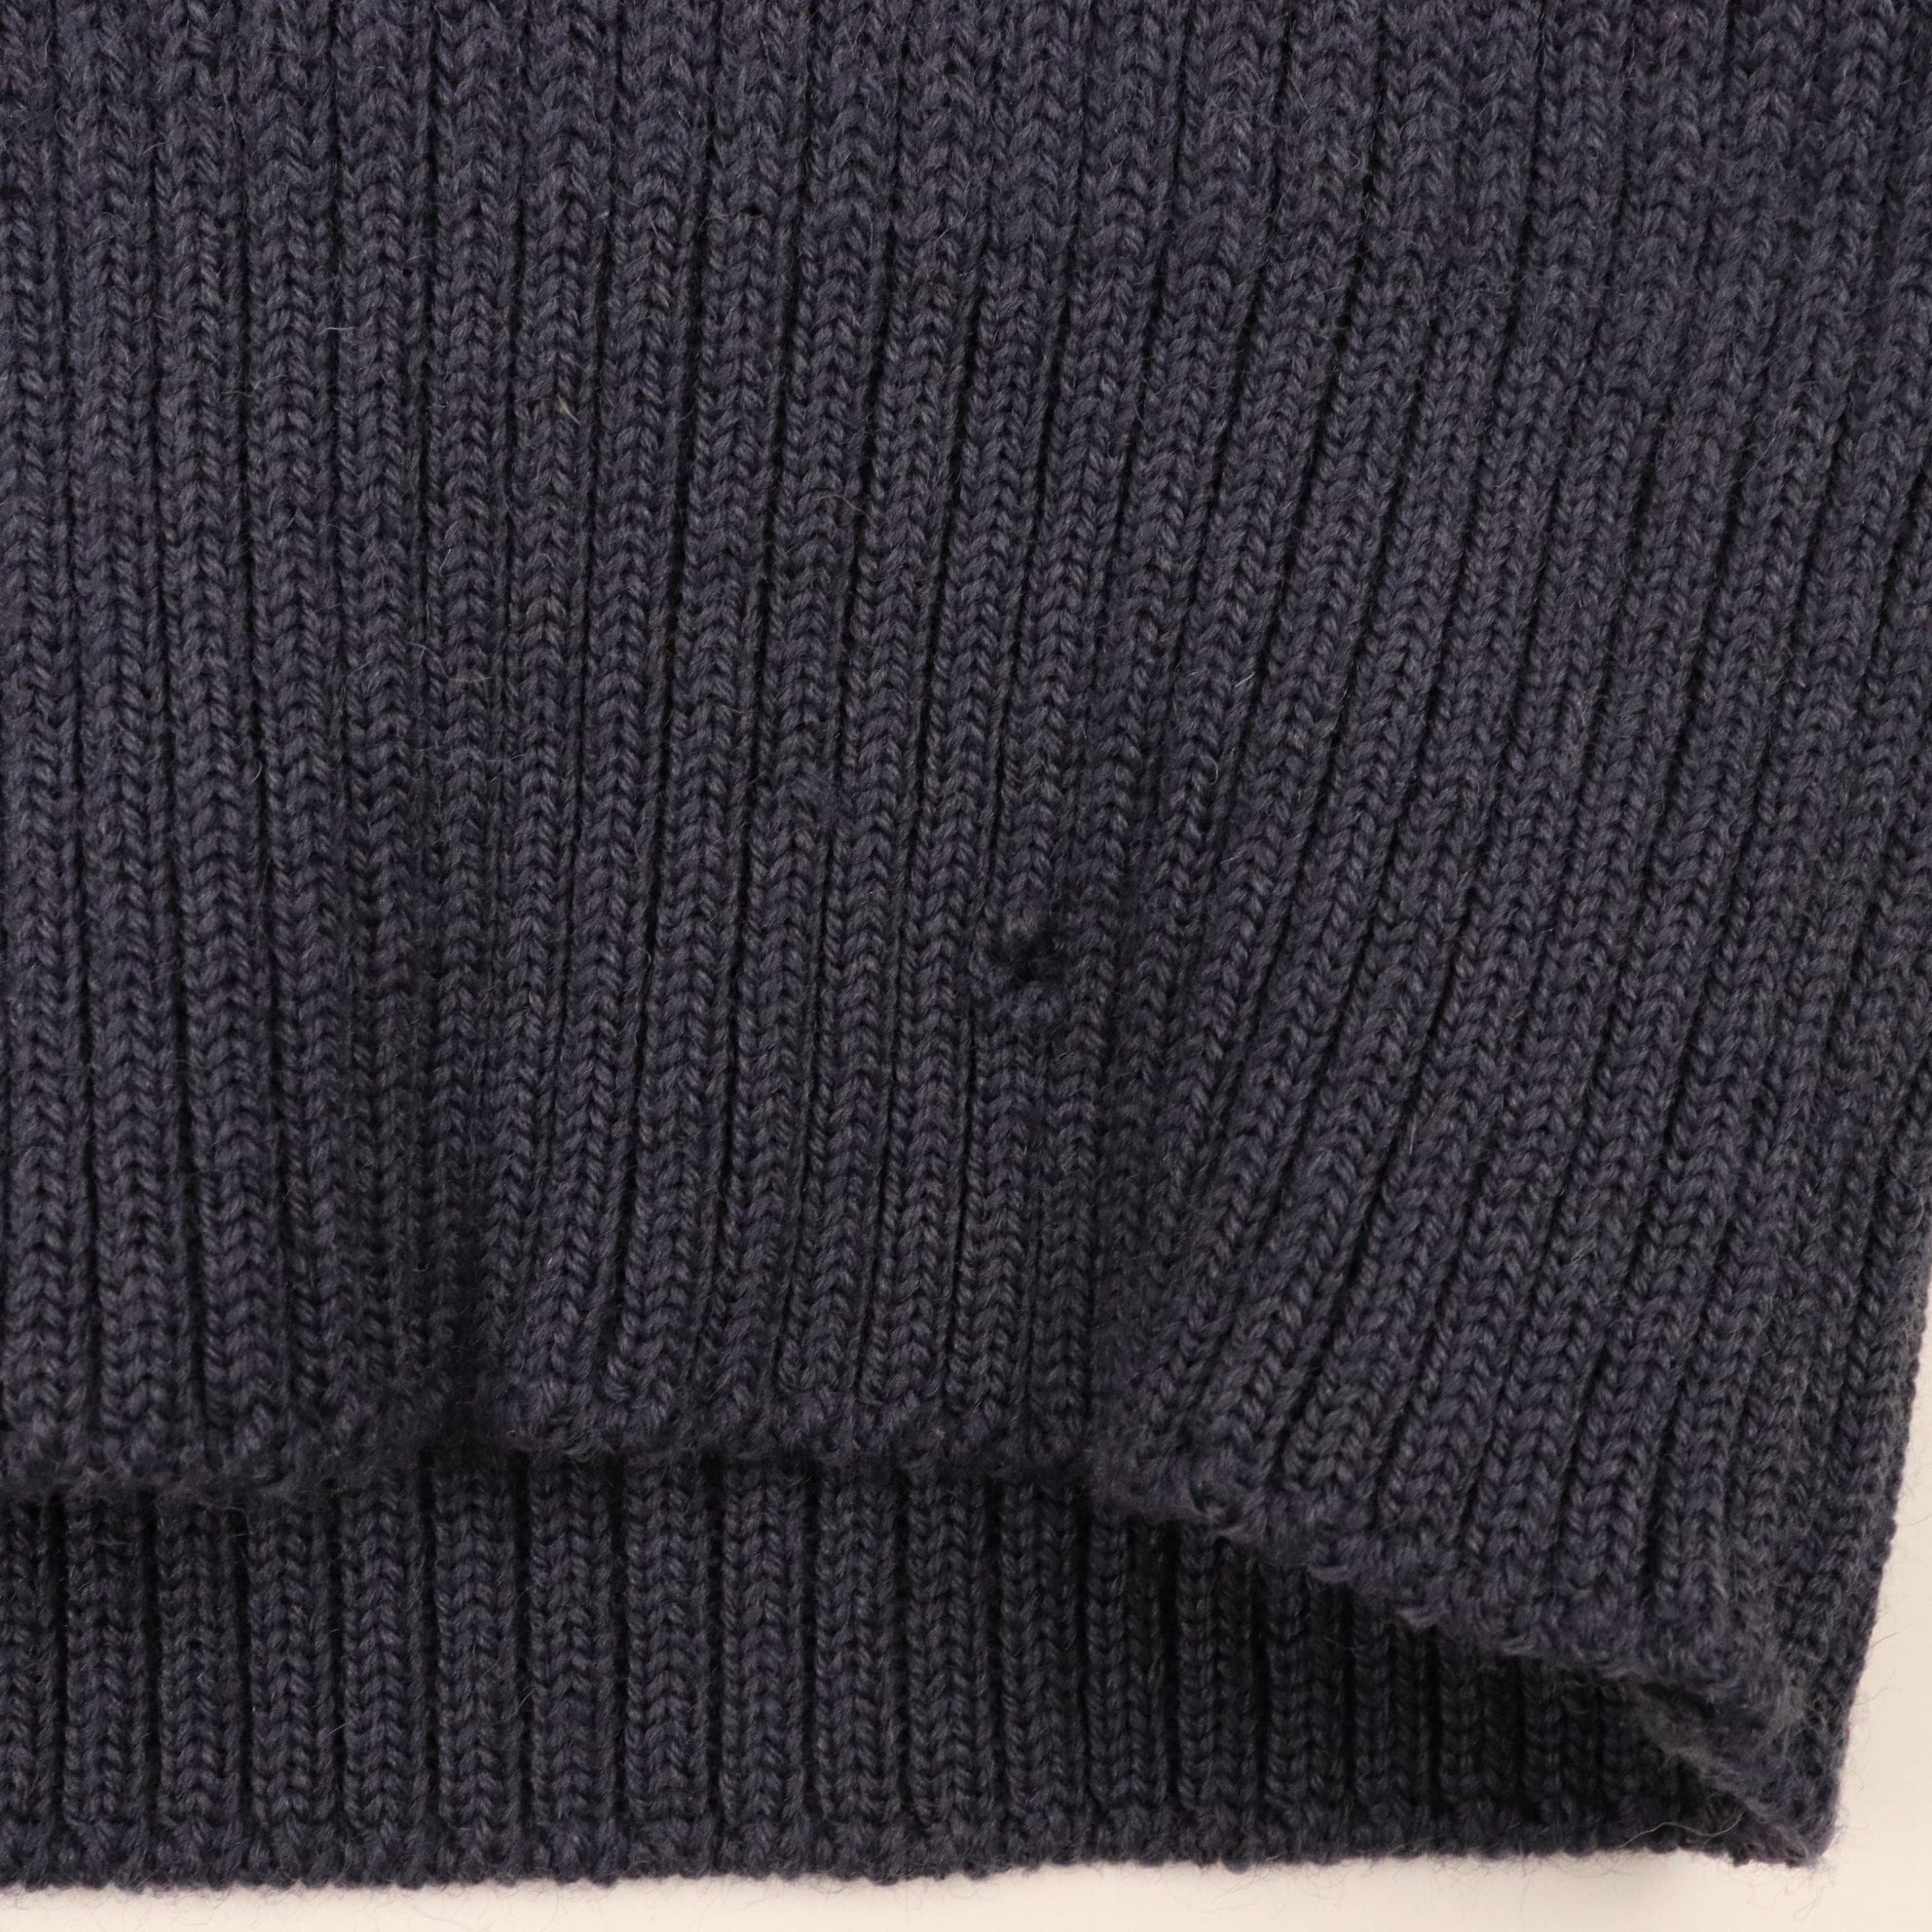 Vintage Brigade Quarter Masters British Military Wool Knit Sweater Size  40(S) Fits Slim